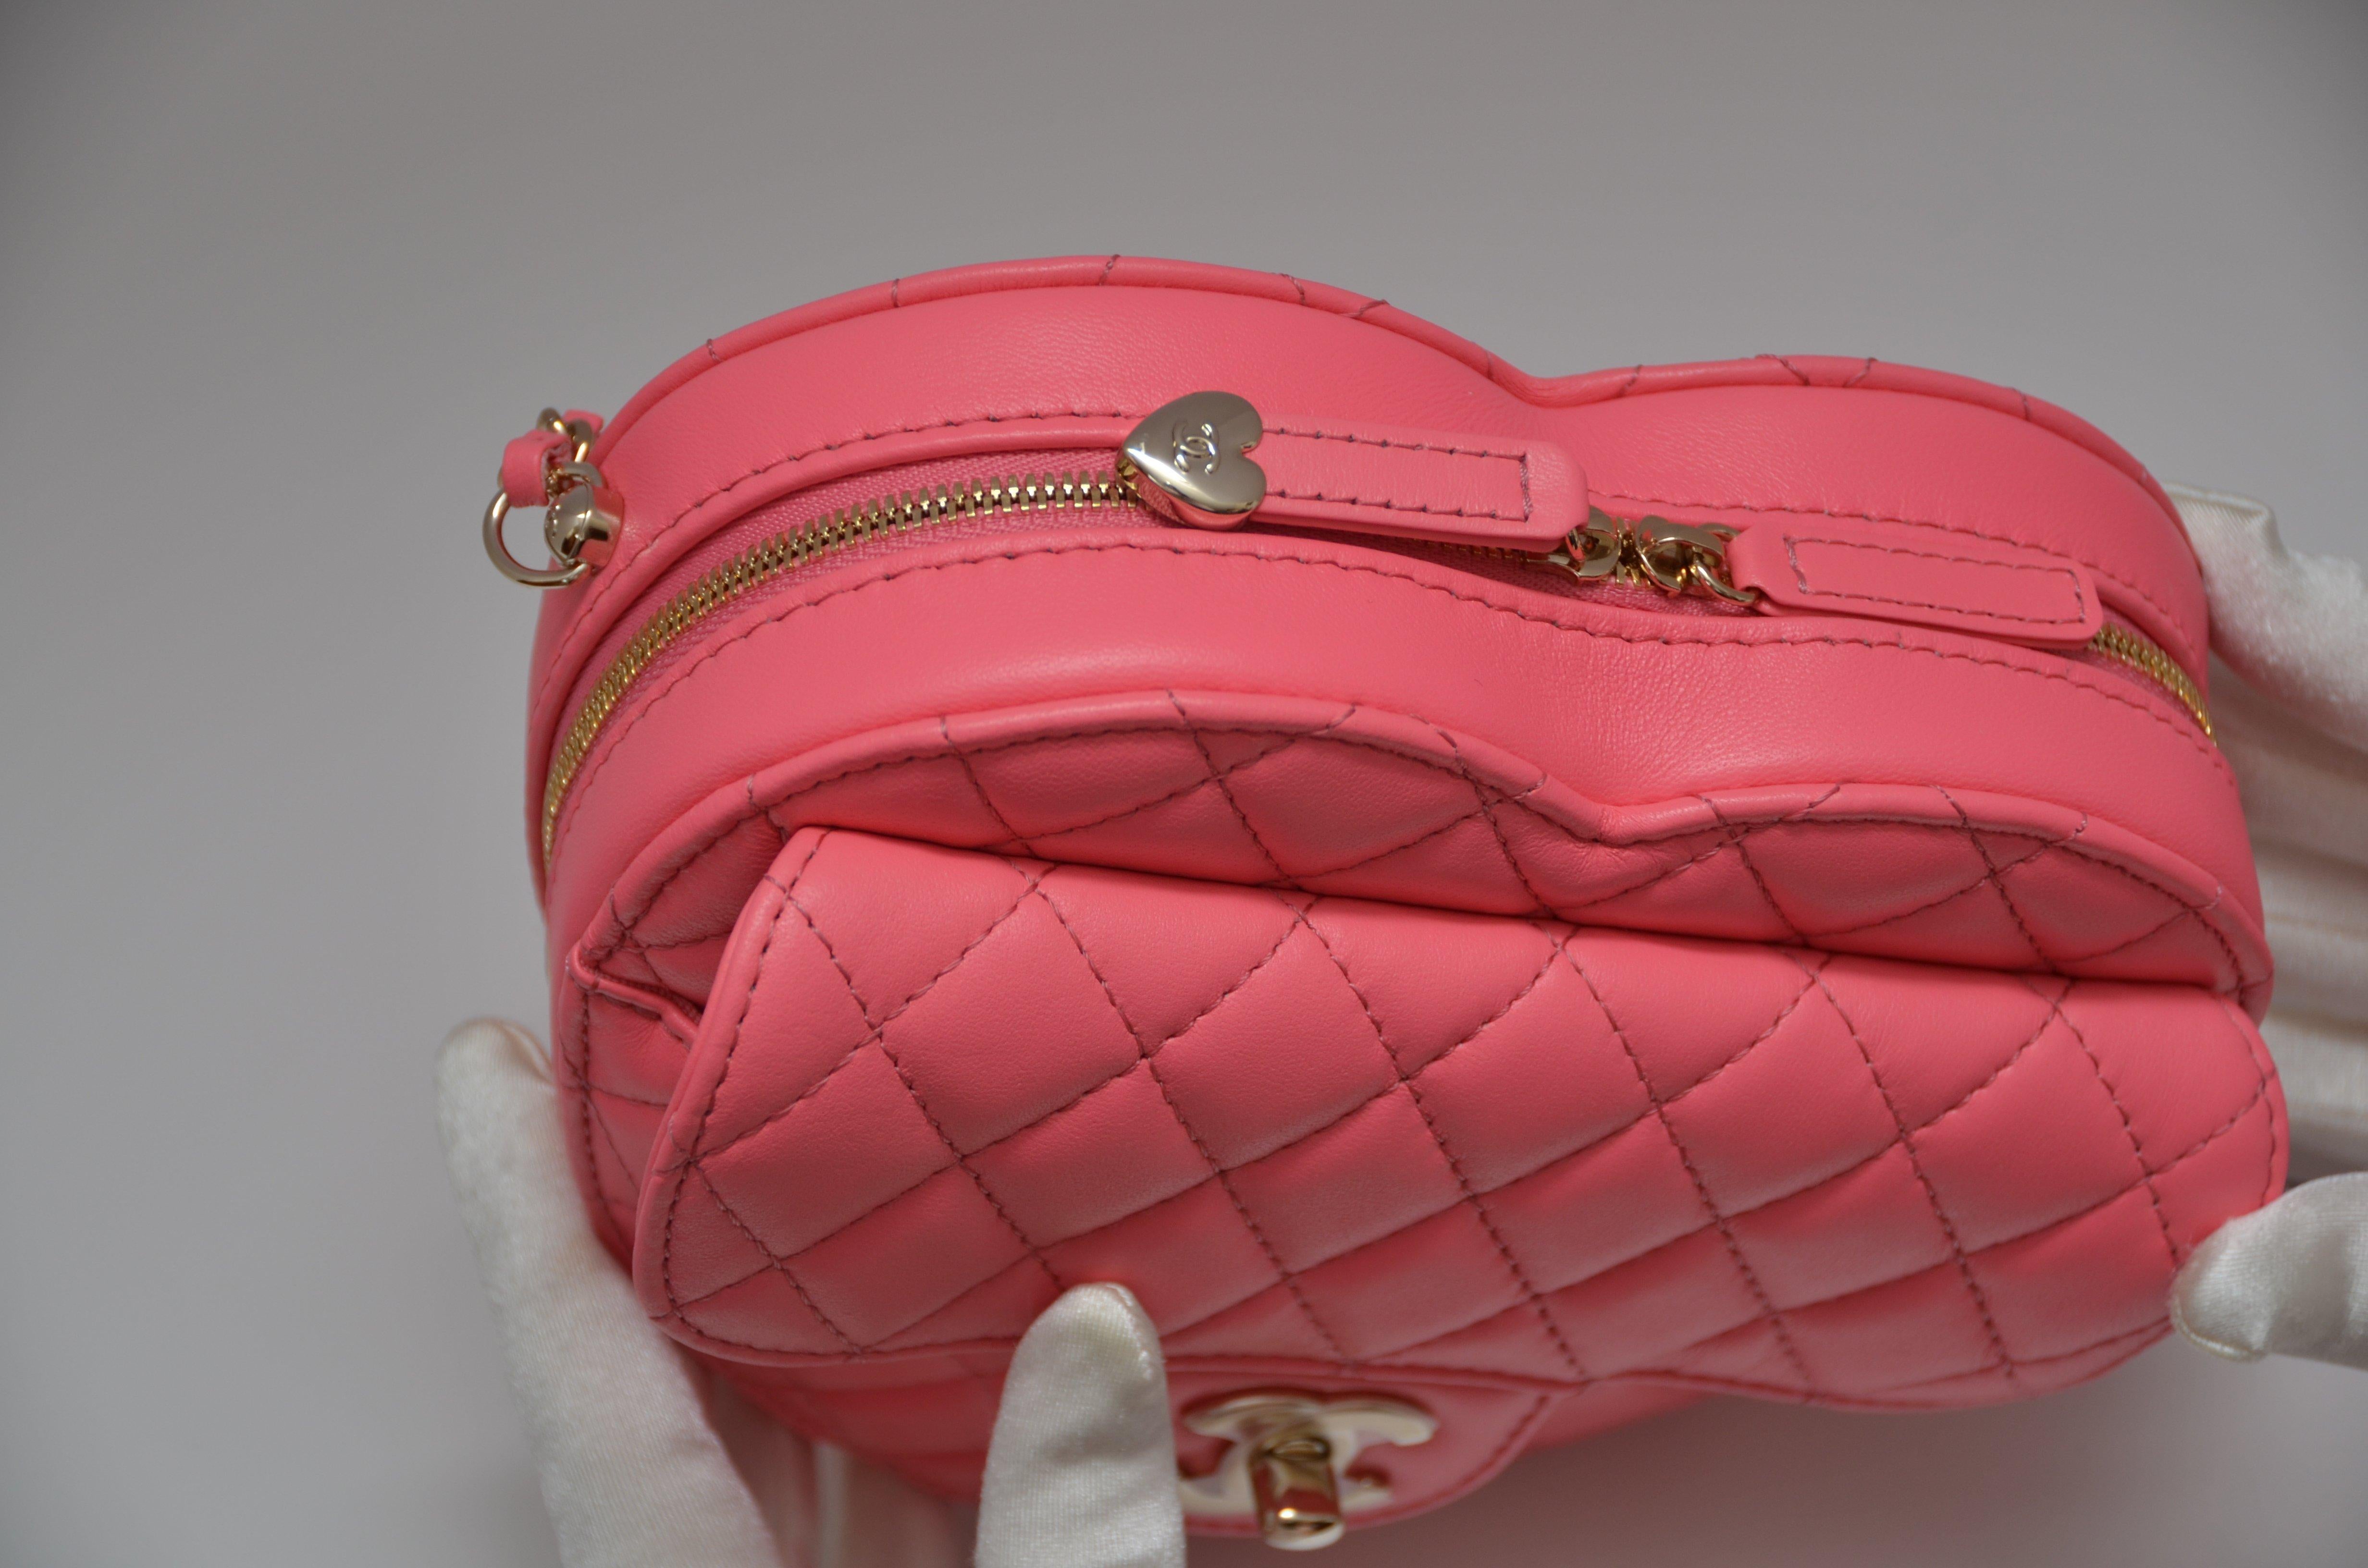 CHANEL '22 RUNWAY Large Lambskin Pink Heart Bag Handbag NEW With Tags 1